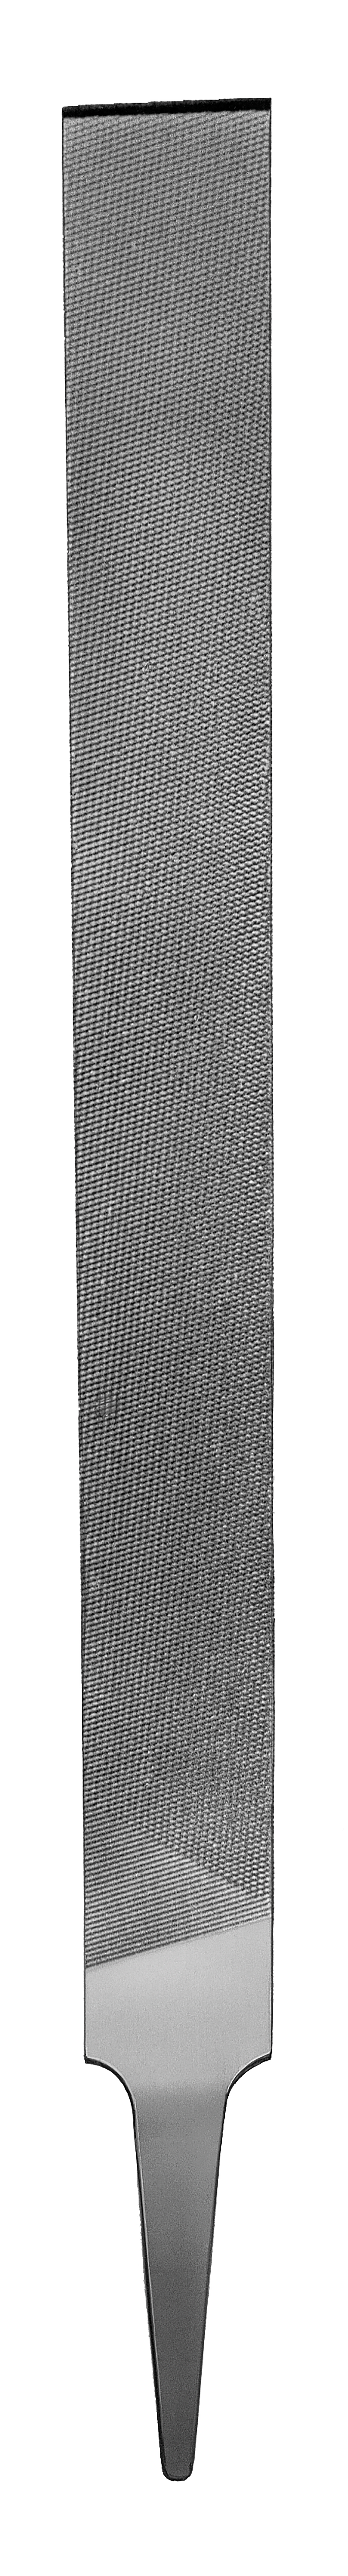 Foto of  Werkplaatsvijlen conform DIN 7261, vorm D, keep 2, 250 mm 